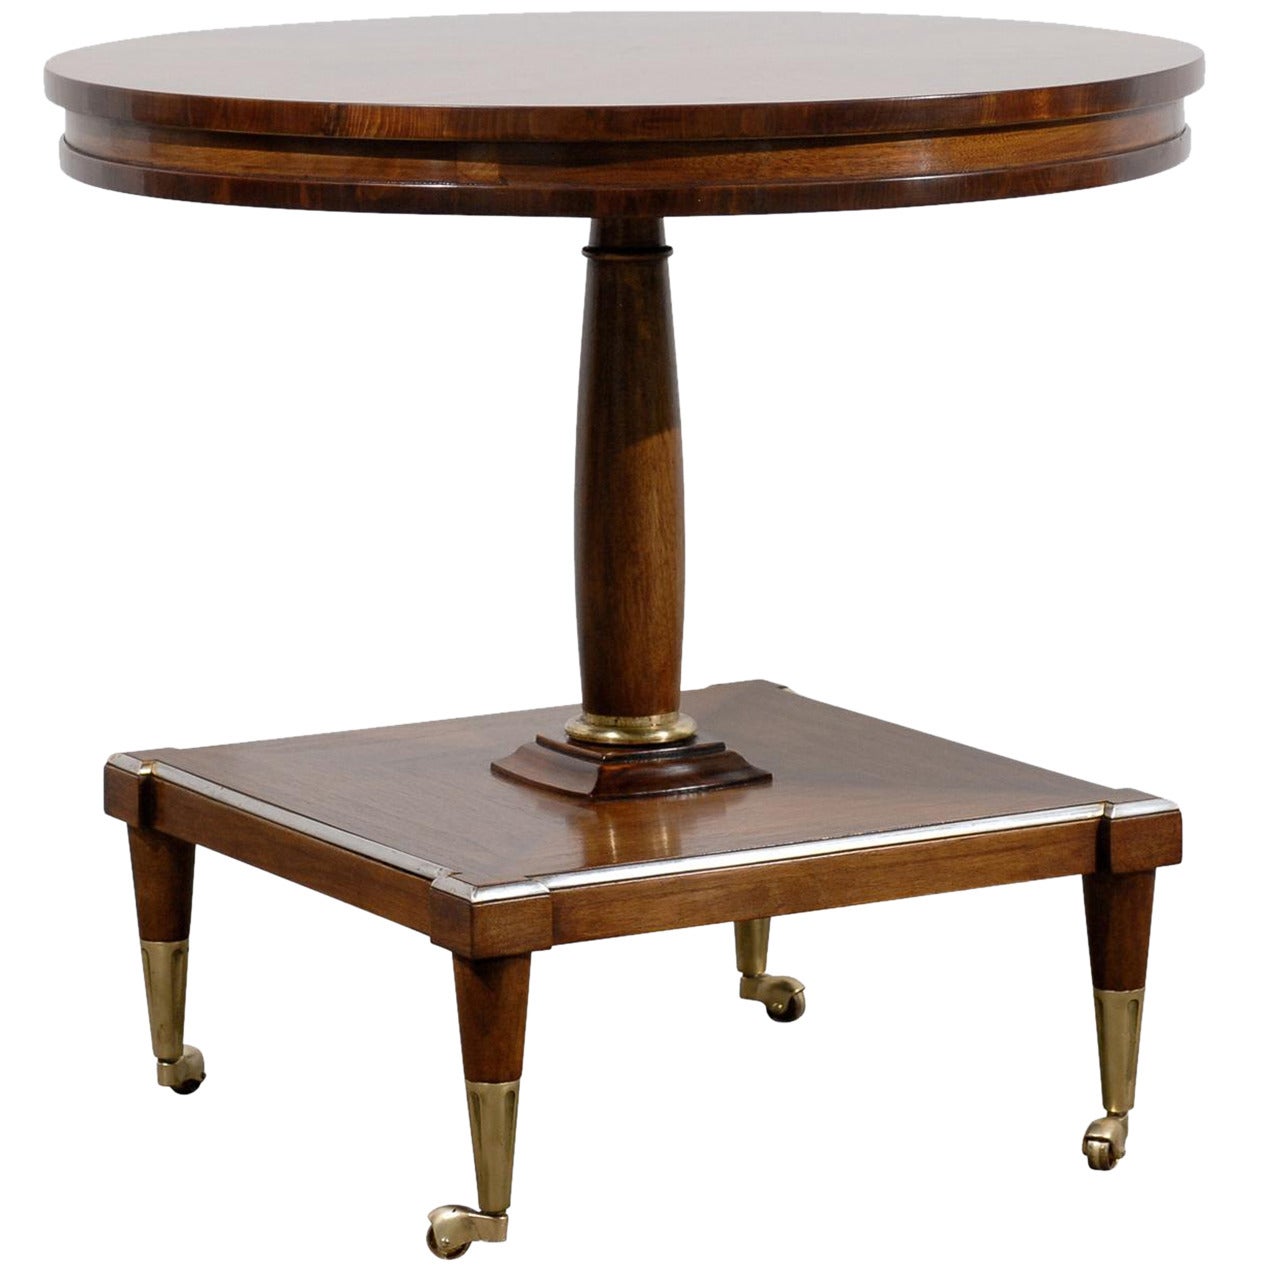 Vintage Pedestal Table by Drexel